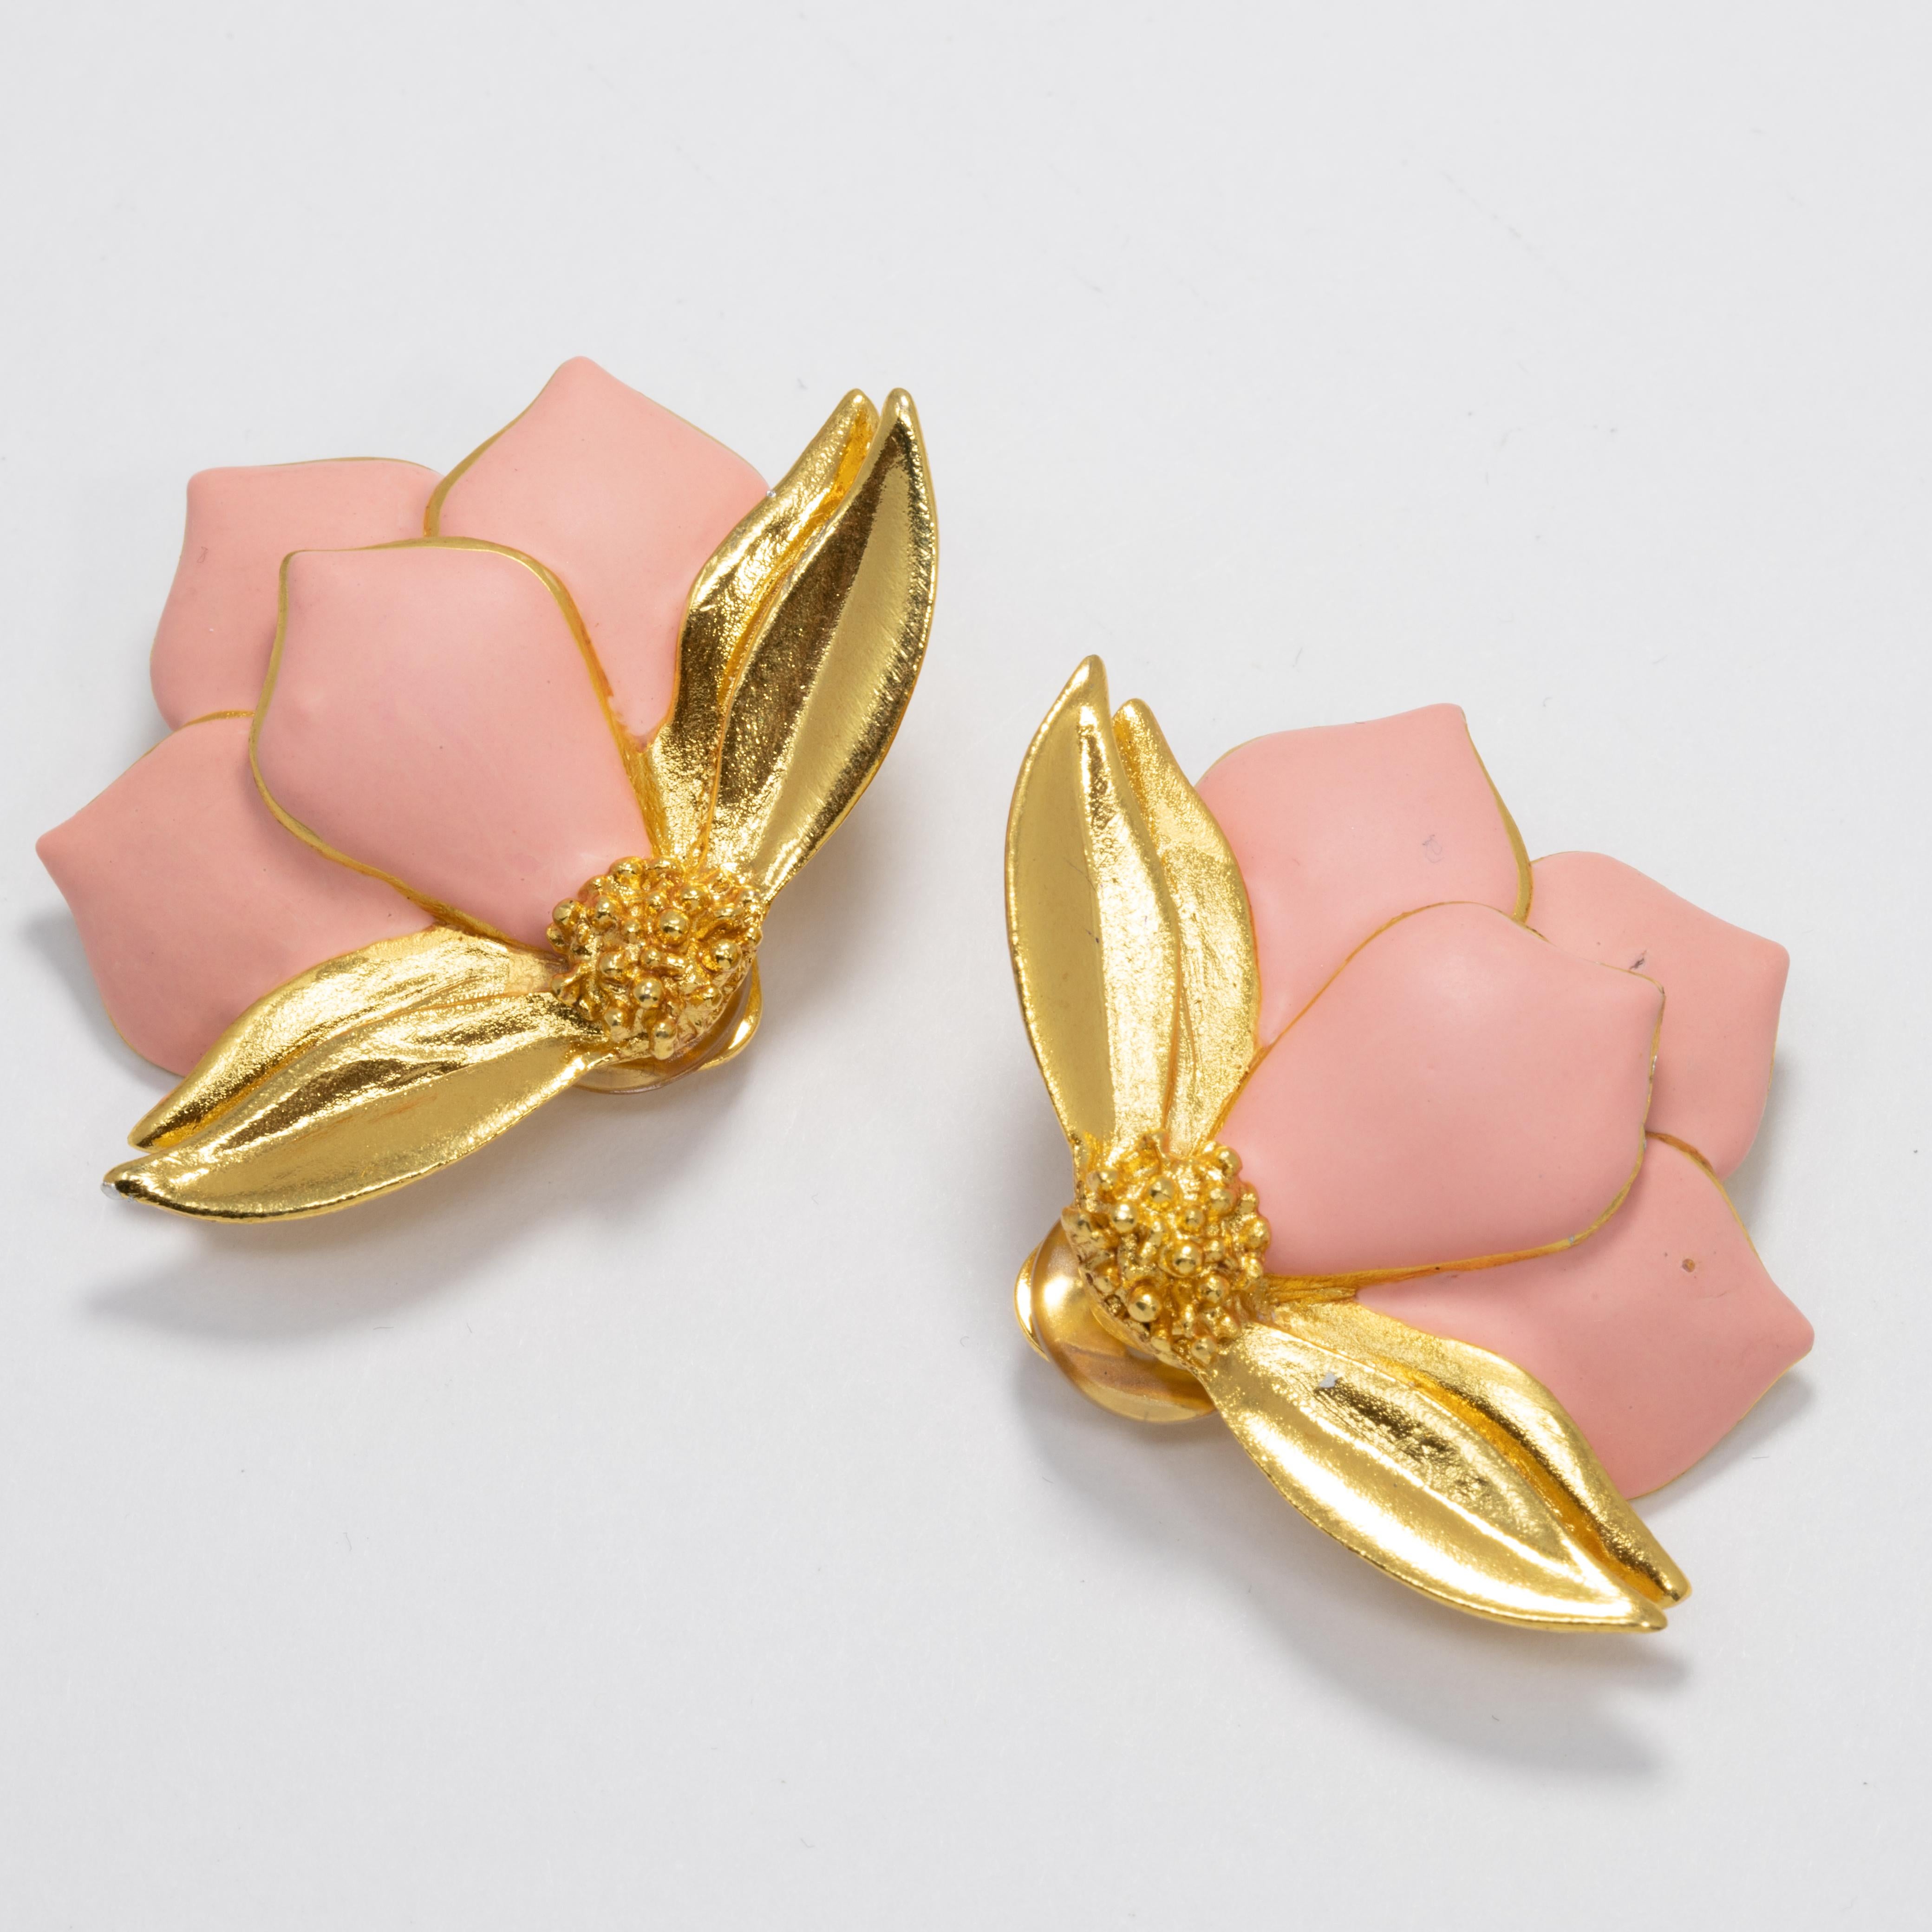 Pair of Oscar de la Renta clip on earrings, featuring gold flowers with painted pink petals.

Hallmarks: Oscar de la Renta, Made in USA